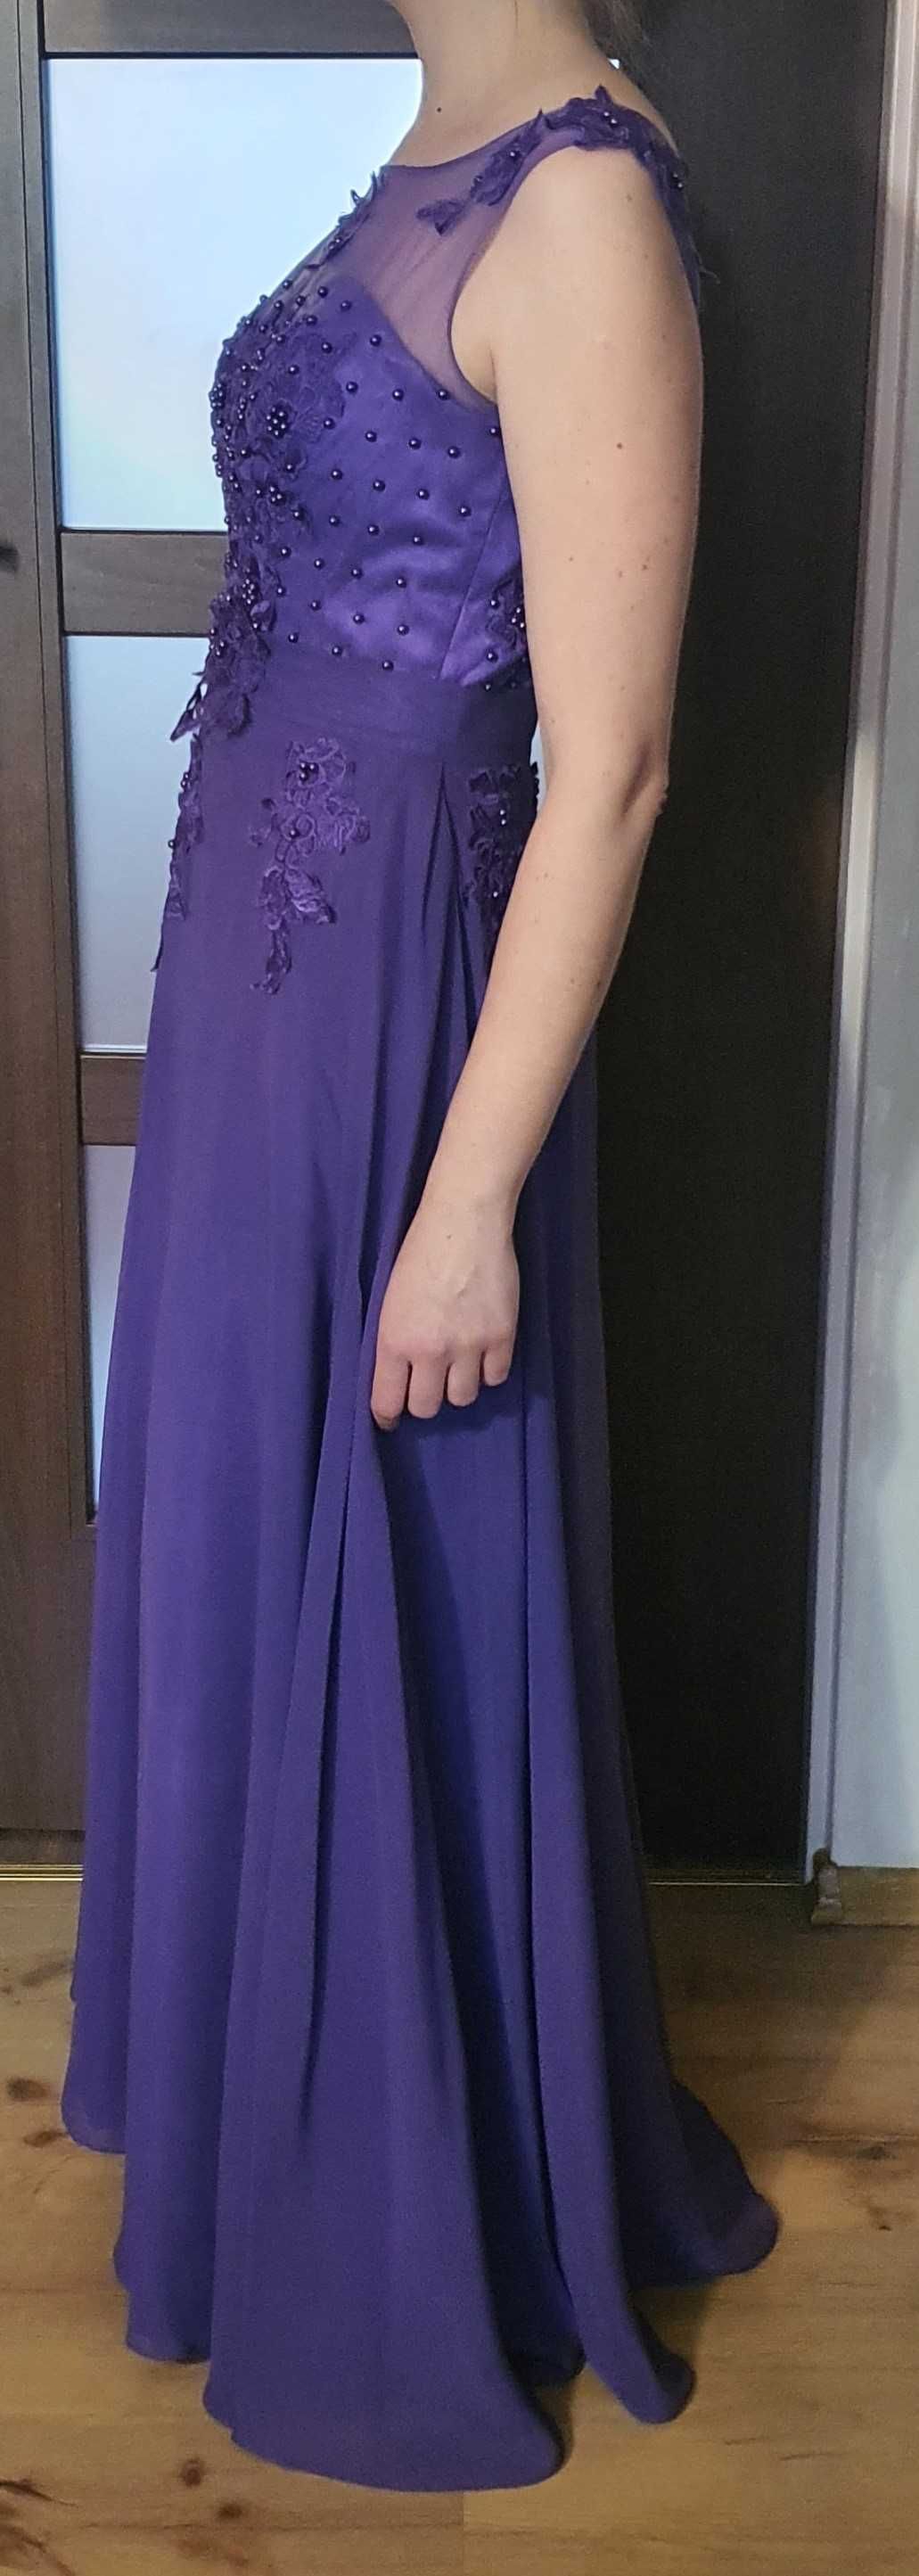 Fioletowa długa suknia na wesele lub bal - kształt litery A